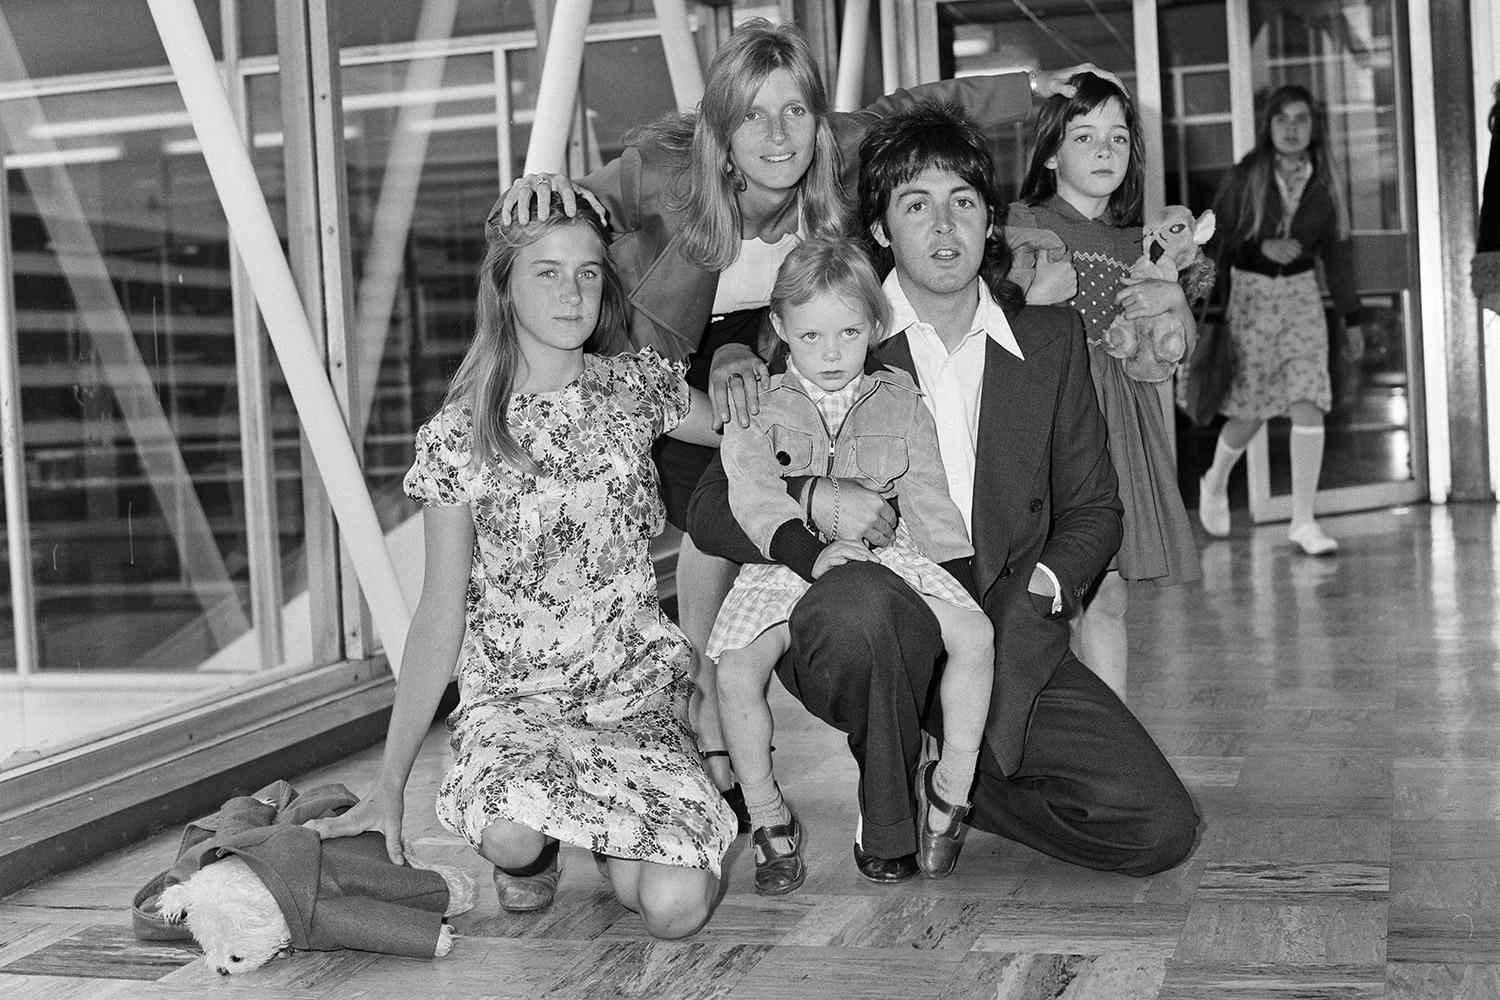 Paul McCartney Life in Pics